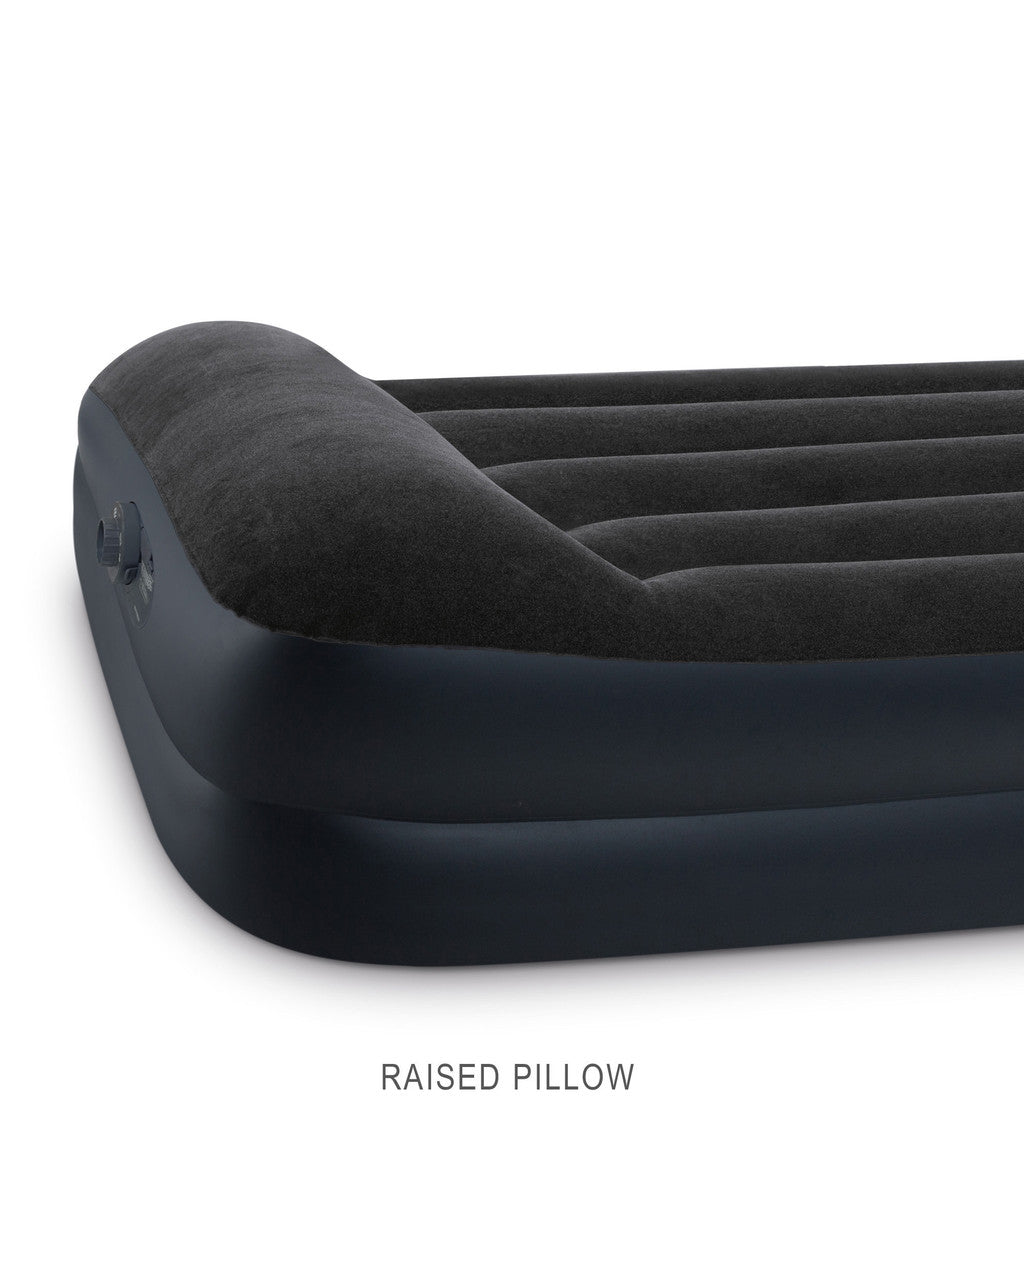 Intex Dura Beam Pillow Rest Raised Air Mattress